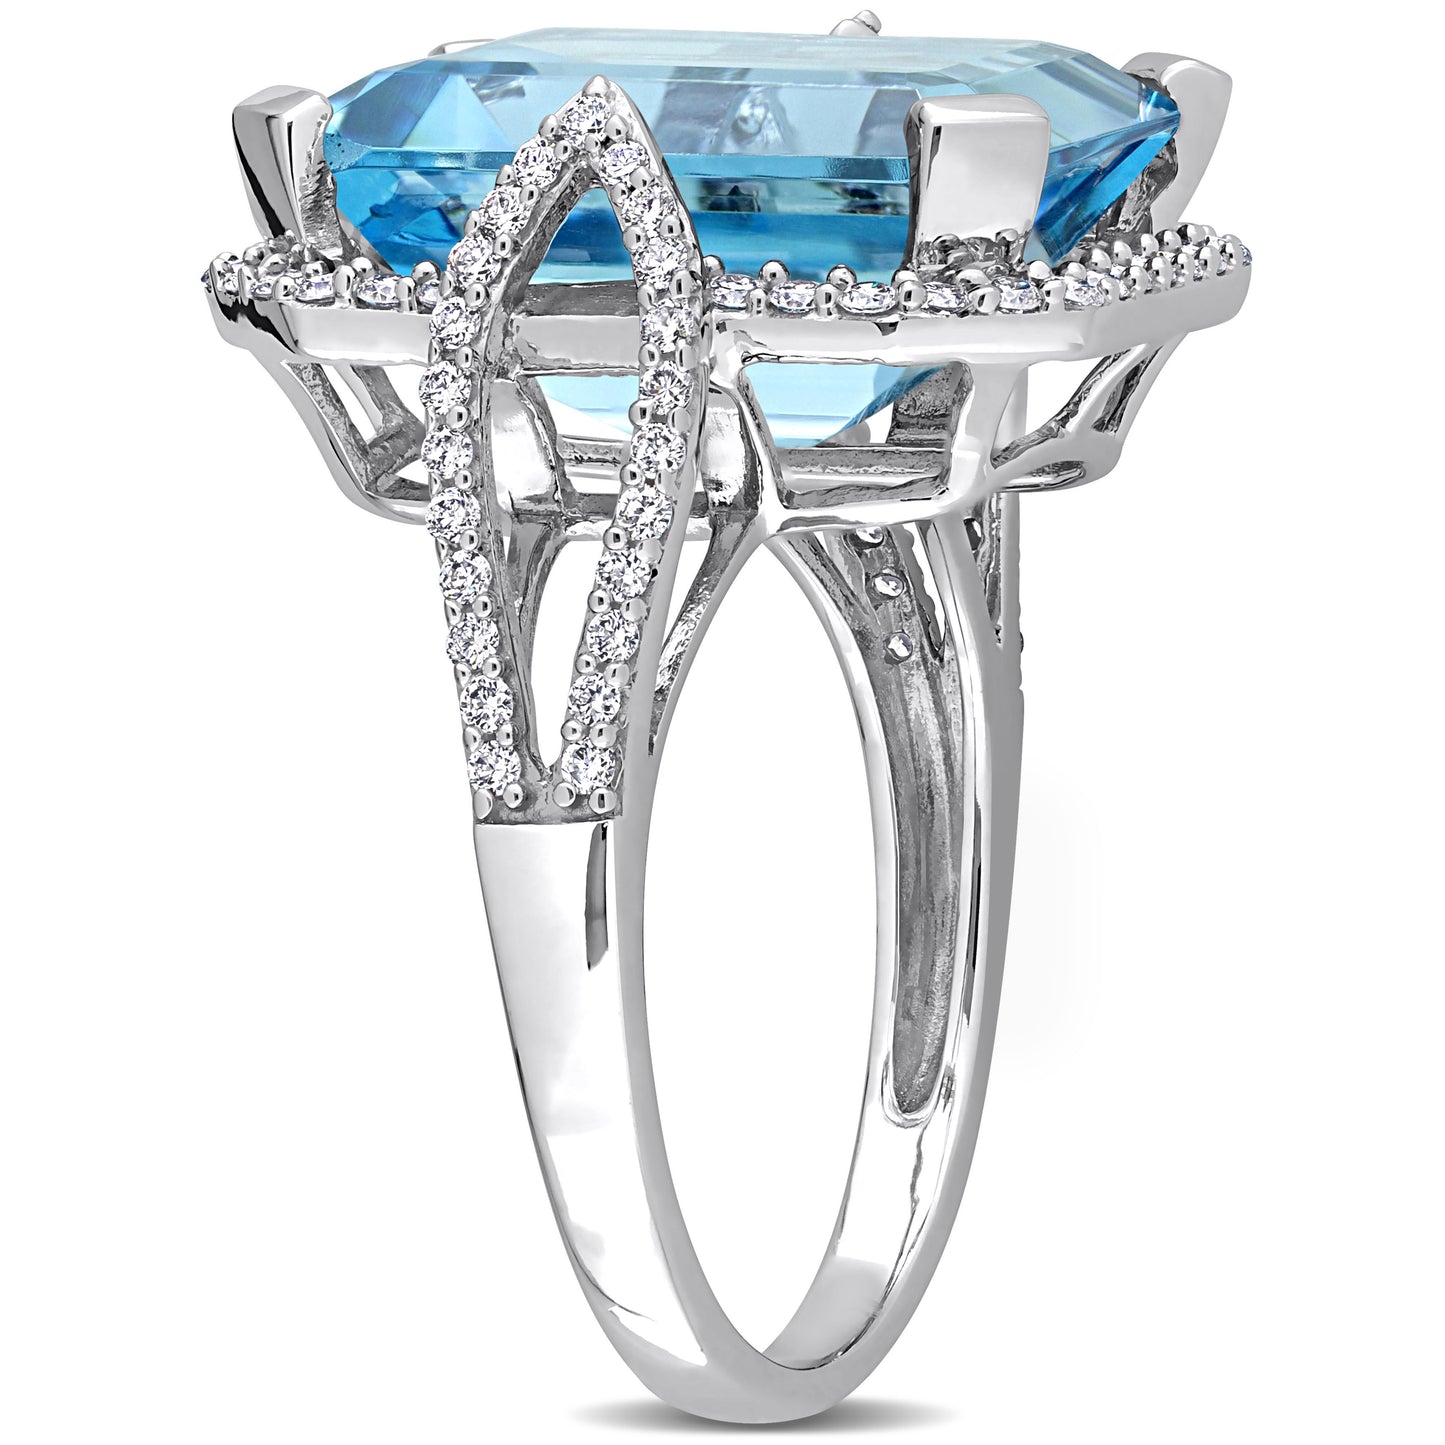 Octagon Cut Sky Blue Topaz & Diamond Ring in 14k White Gold